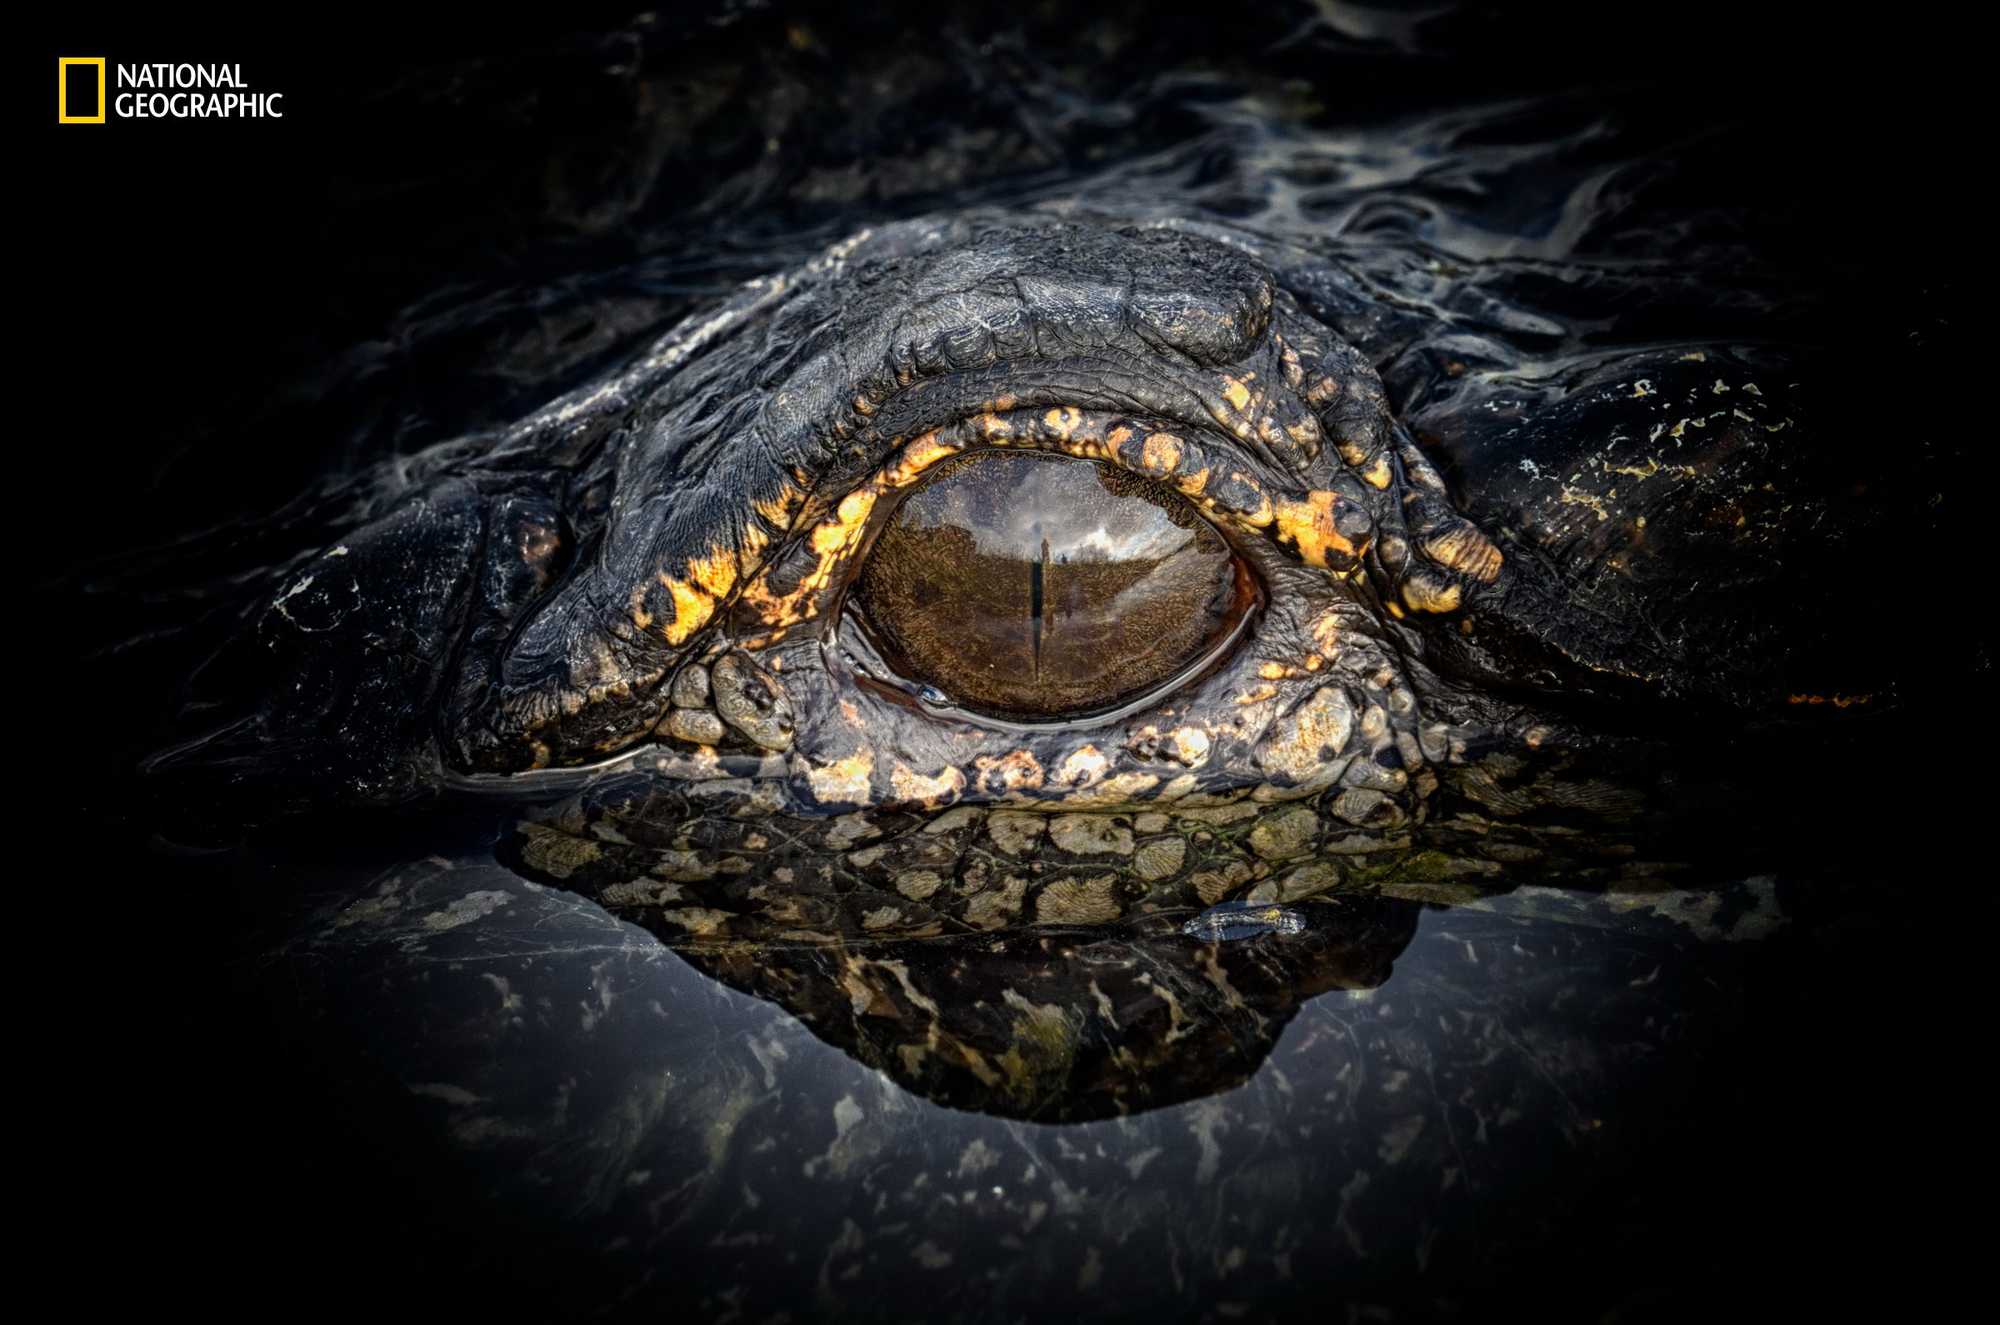 Географик. National Geographic фото. Глаз аллигатора. Крокодильи глаза. Глаз крокодила.